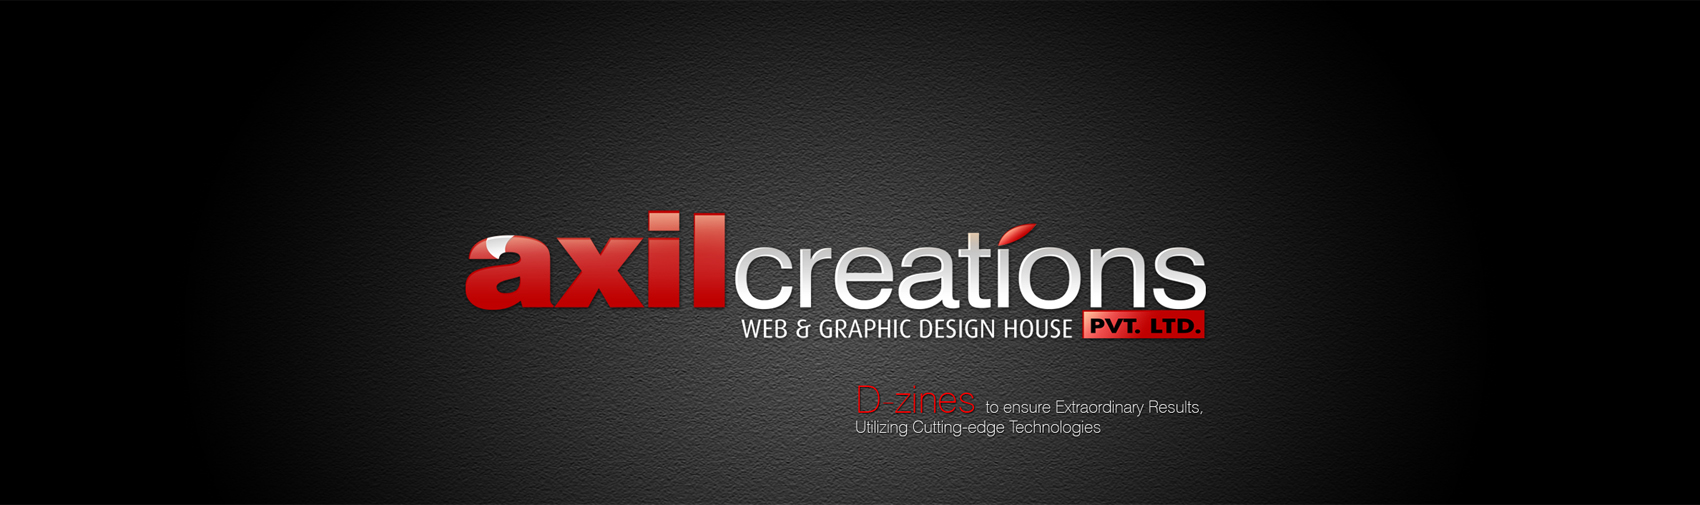 Website Design, Logo Design, Graphic Design, Mobile Application, Wordpress CMS Website